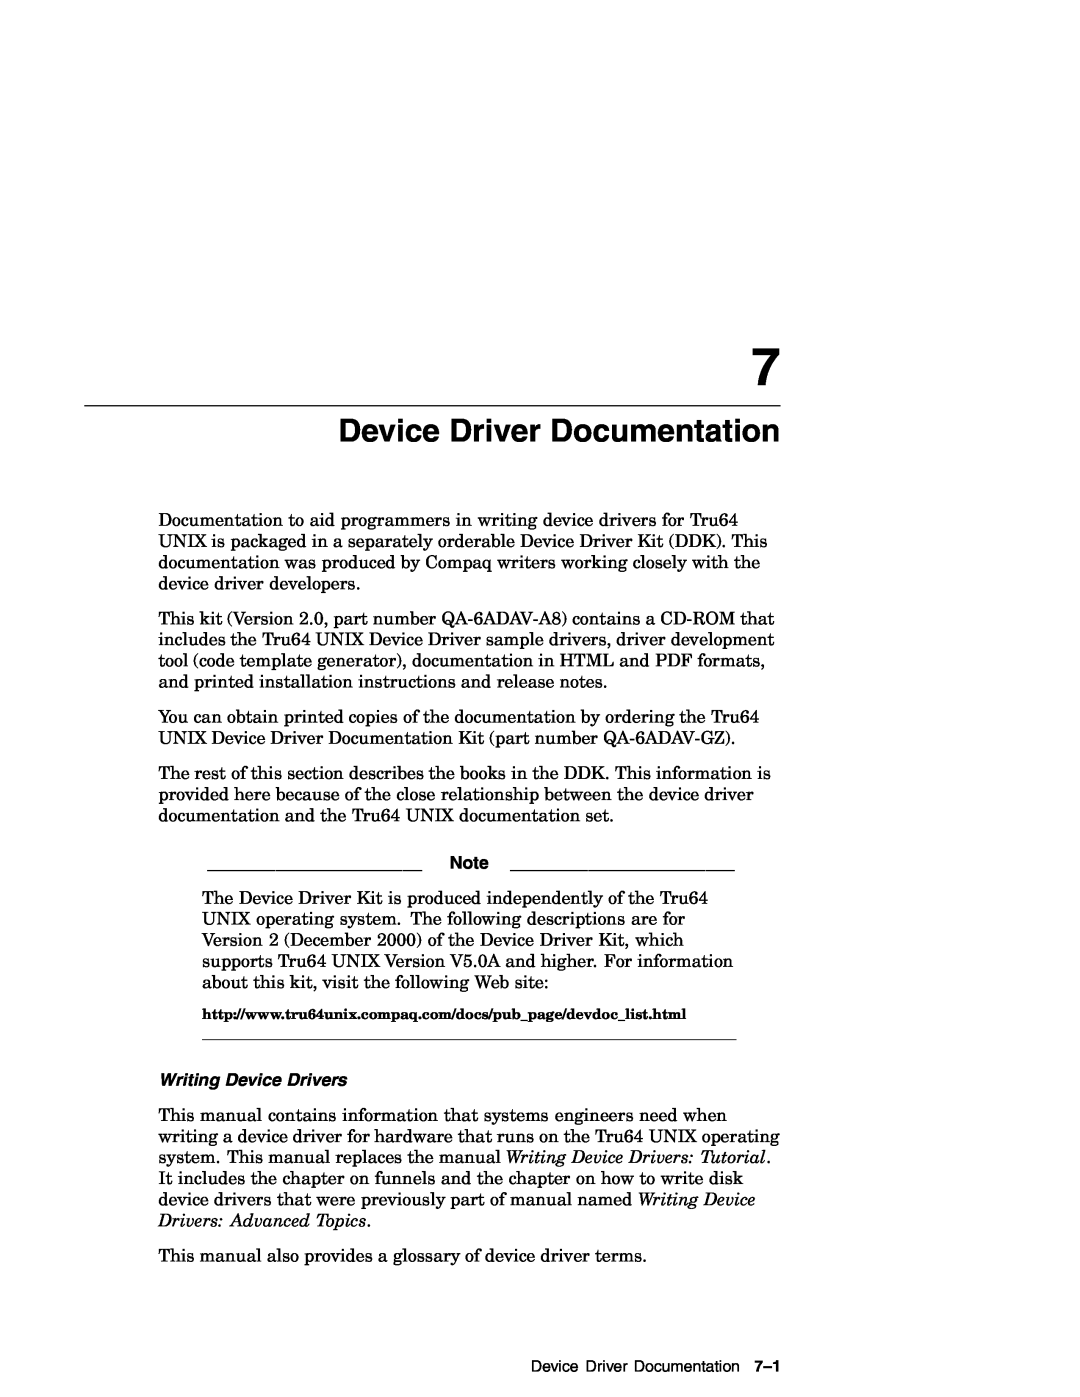 Compaq AA-RH8RD-TE manual Device Driver Documentation, Writing Device Drivers 